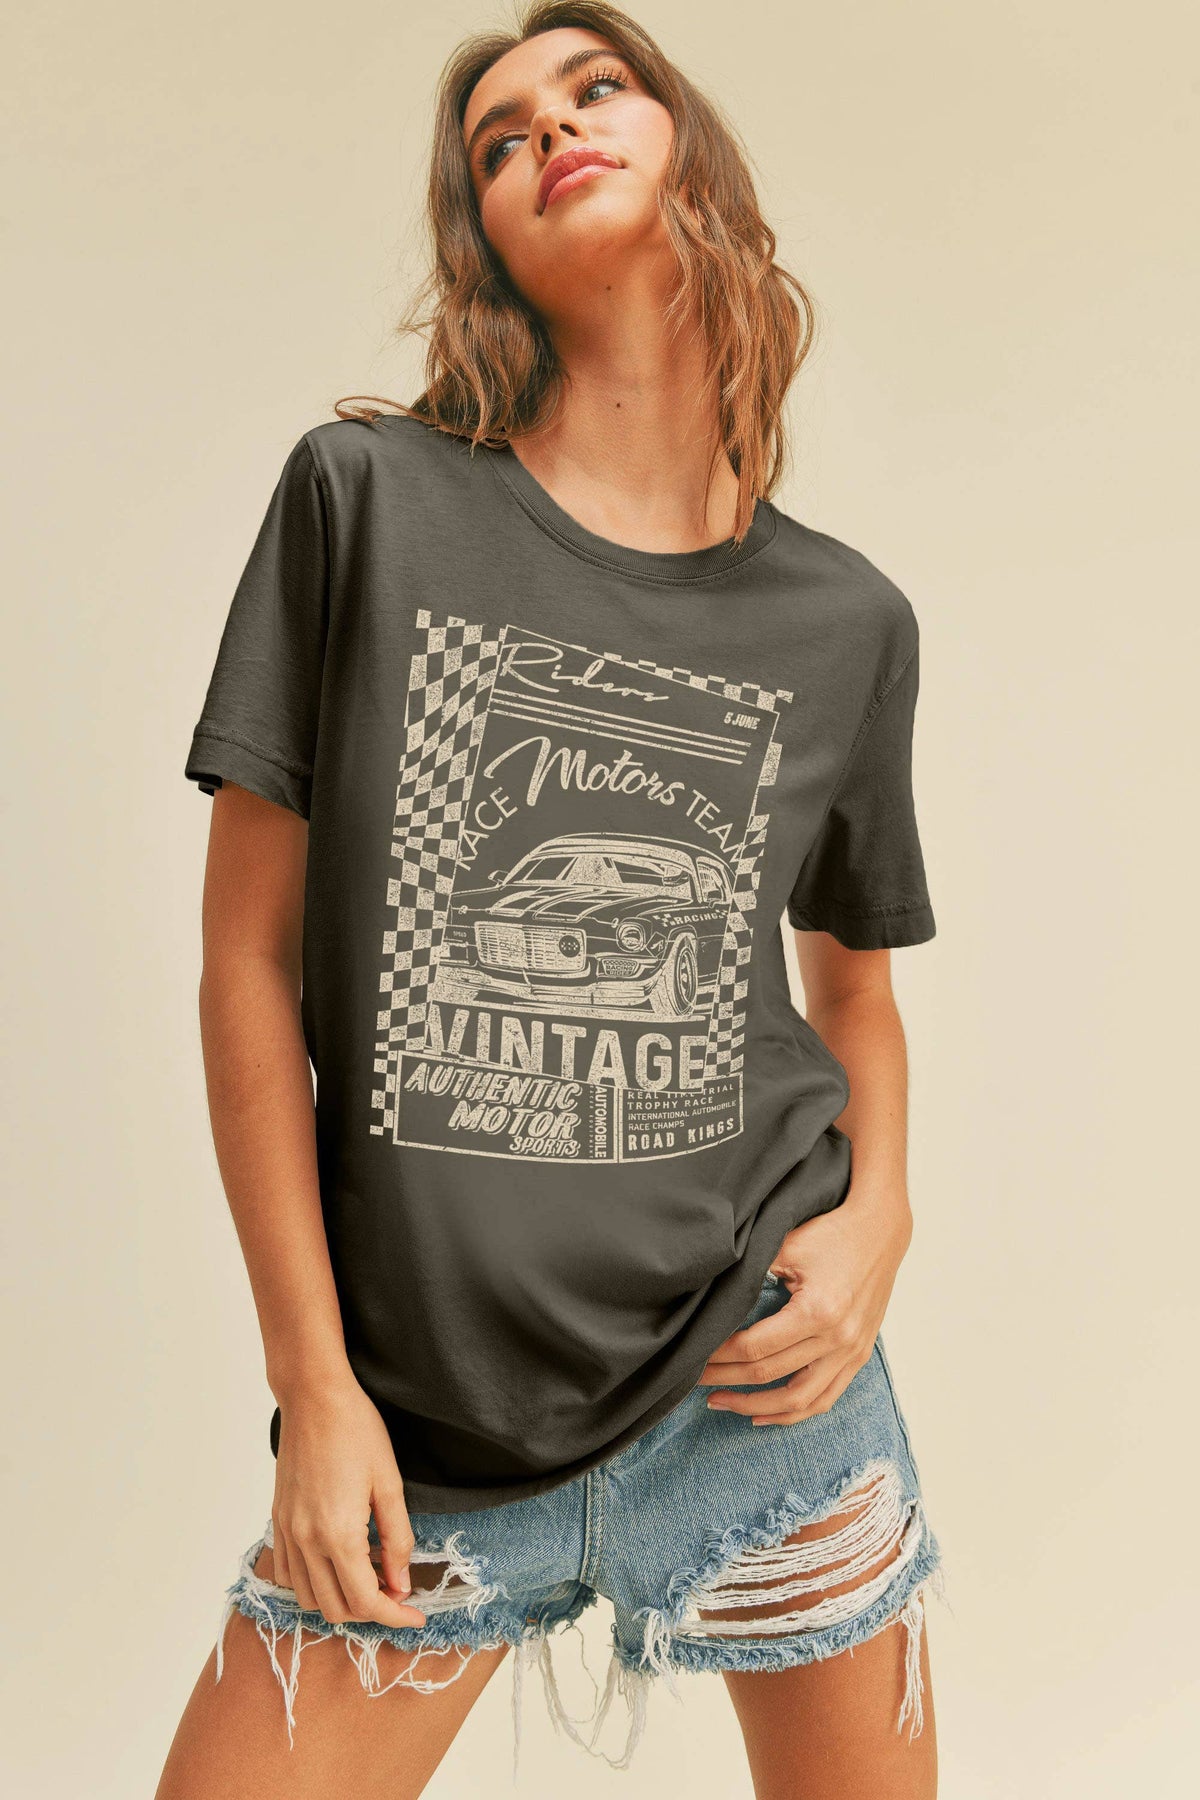 Vintage Race Motors Team Graphic Tee